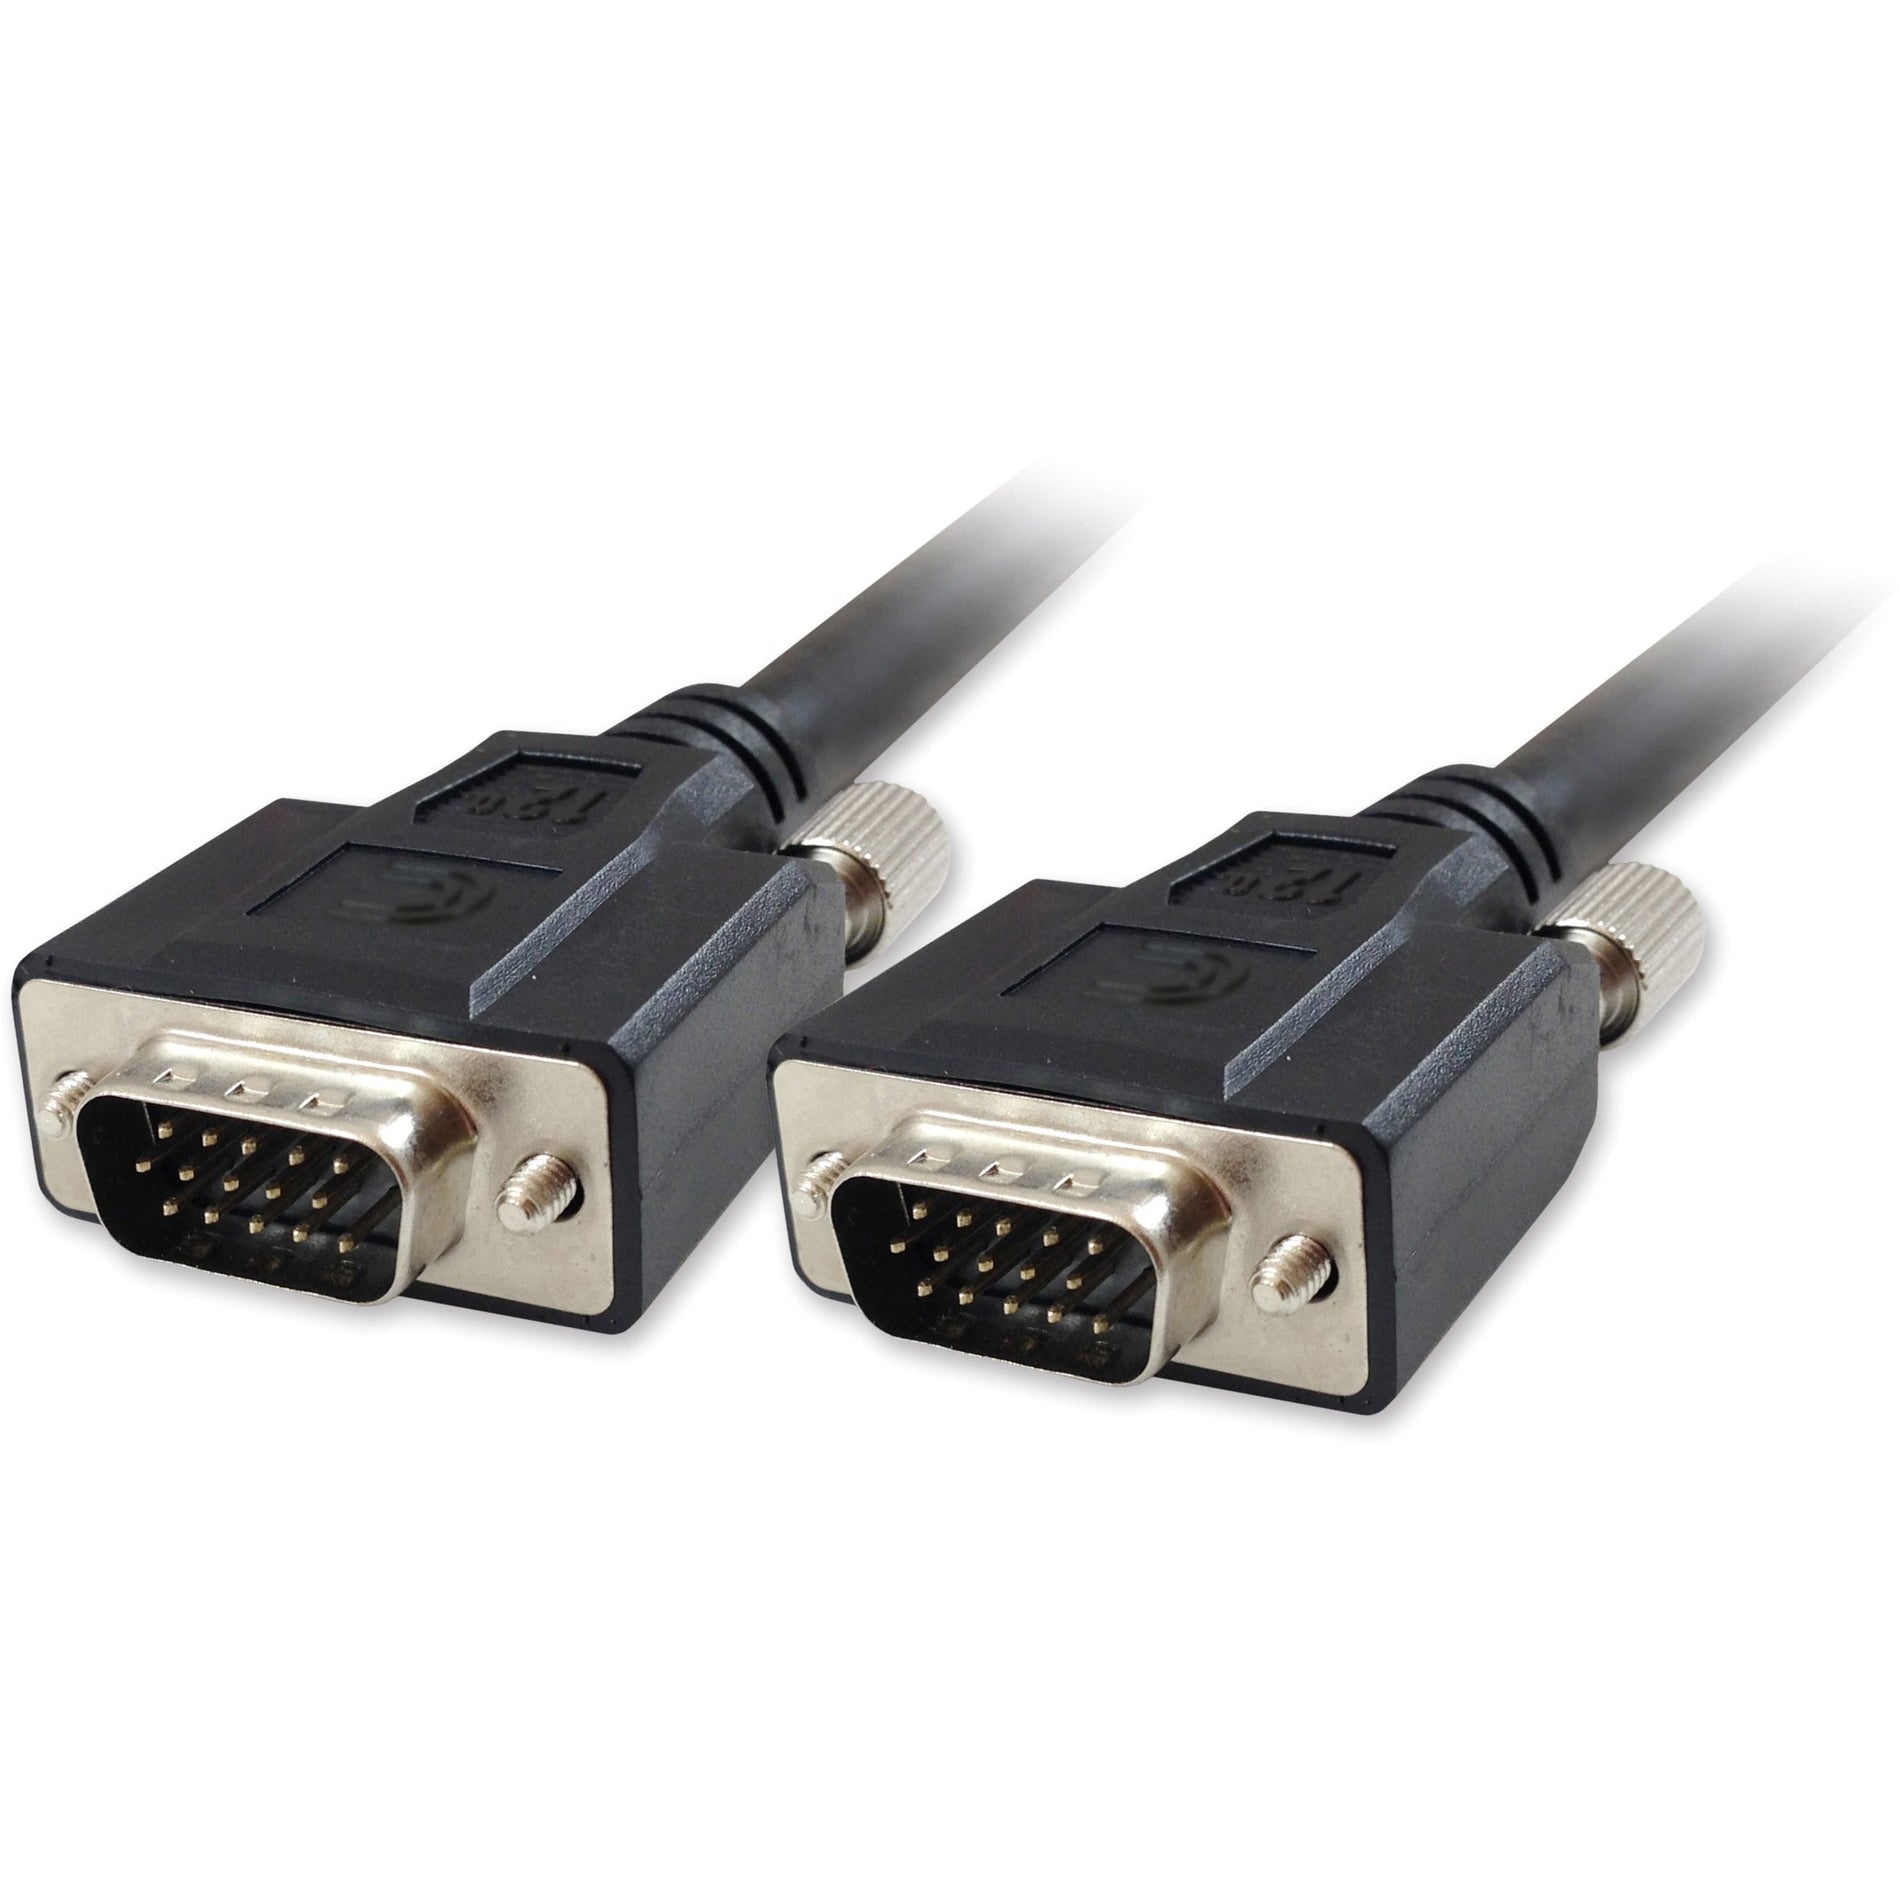 Comprehensive VGA15P-P-3HR Pro AV/IT Series VGA HD 15 Pin Plug to Plug Cable 3 ft, Lifetime Warranty, RoHS Certified